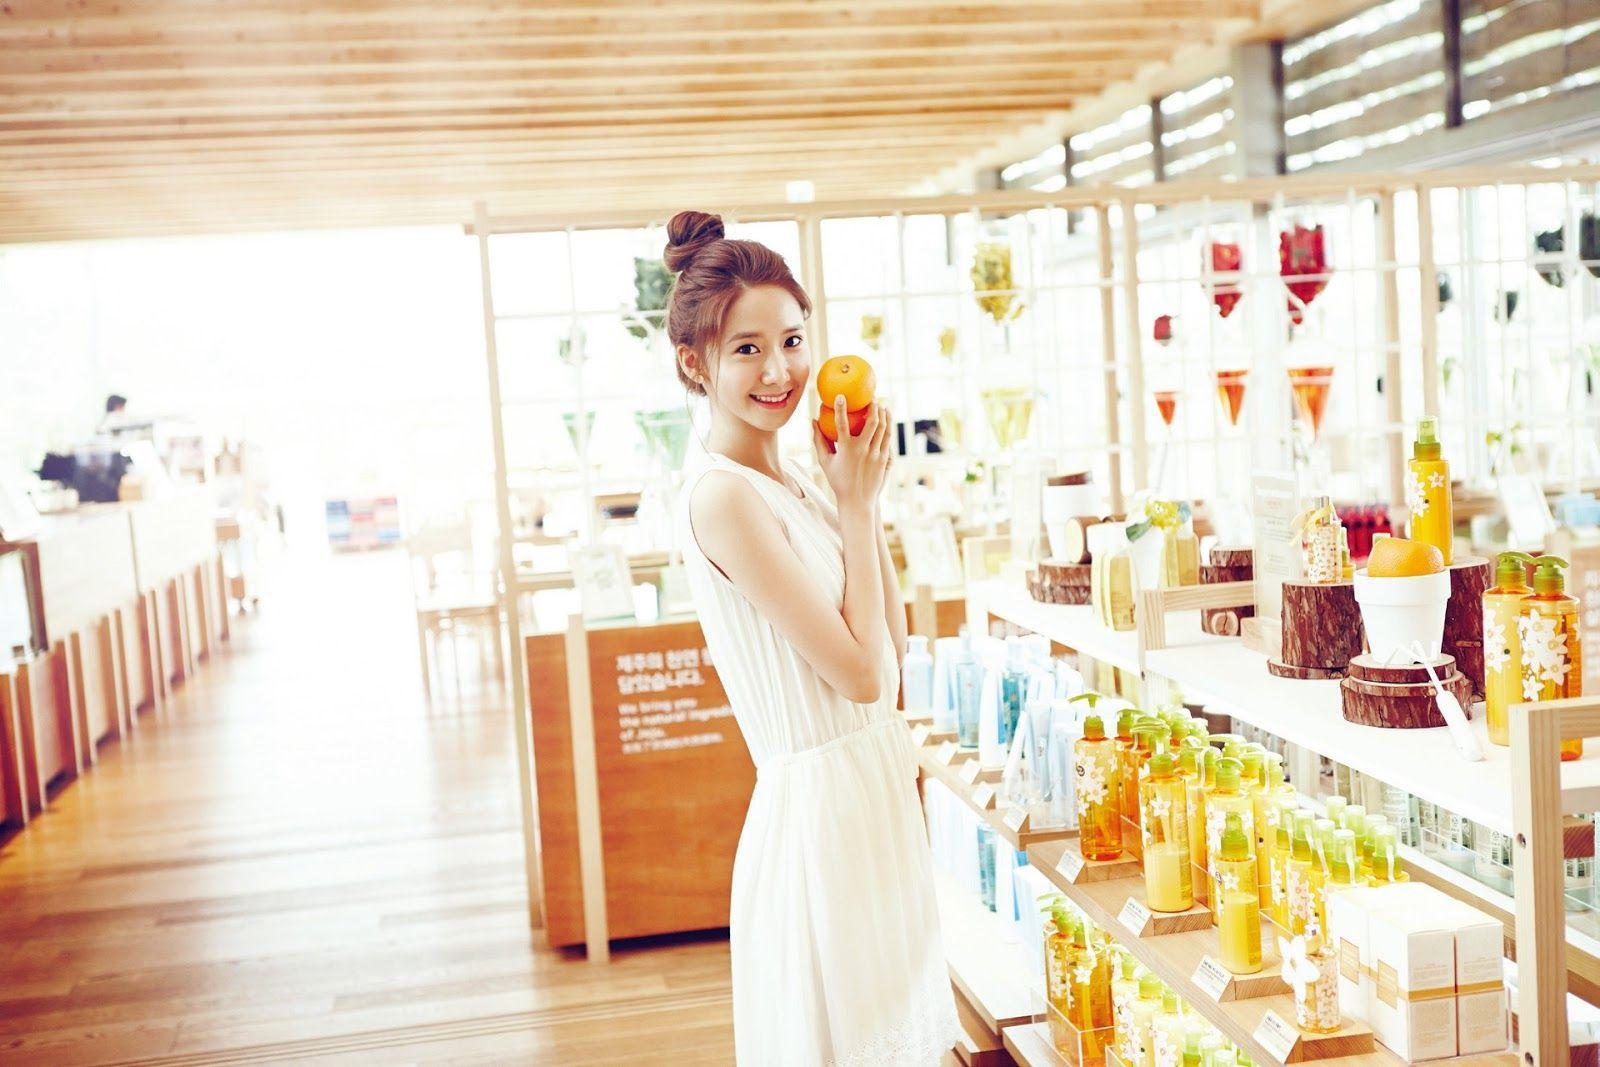 SNSD YoonA Innisfree Organic Green Cafe Wallpaper HD